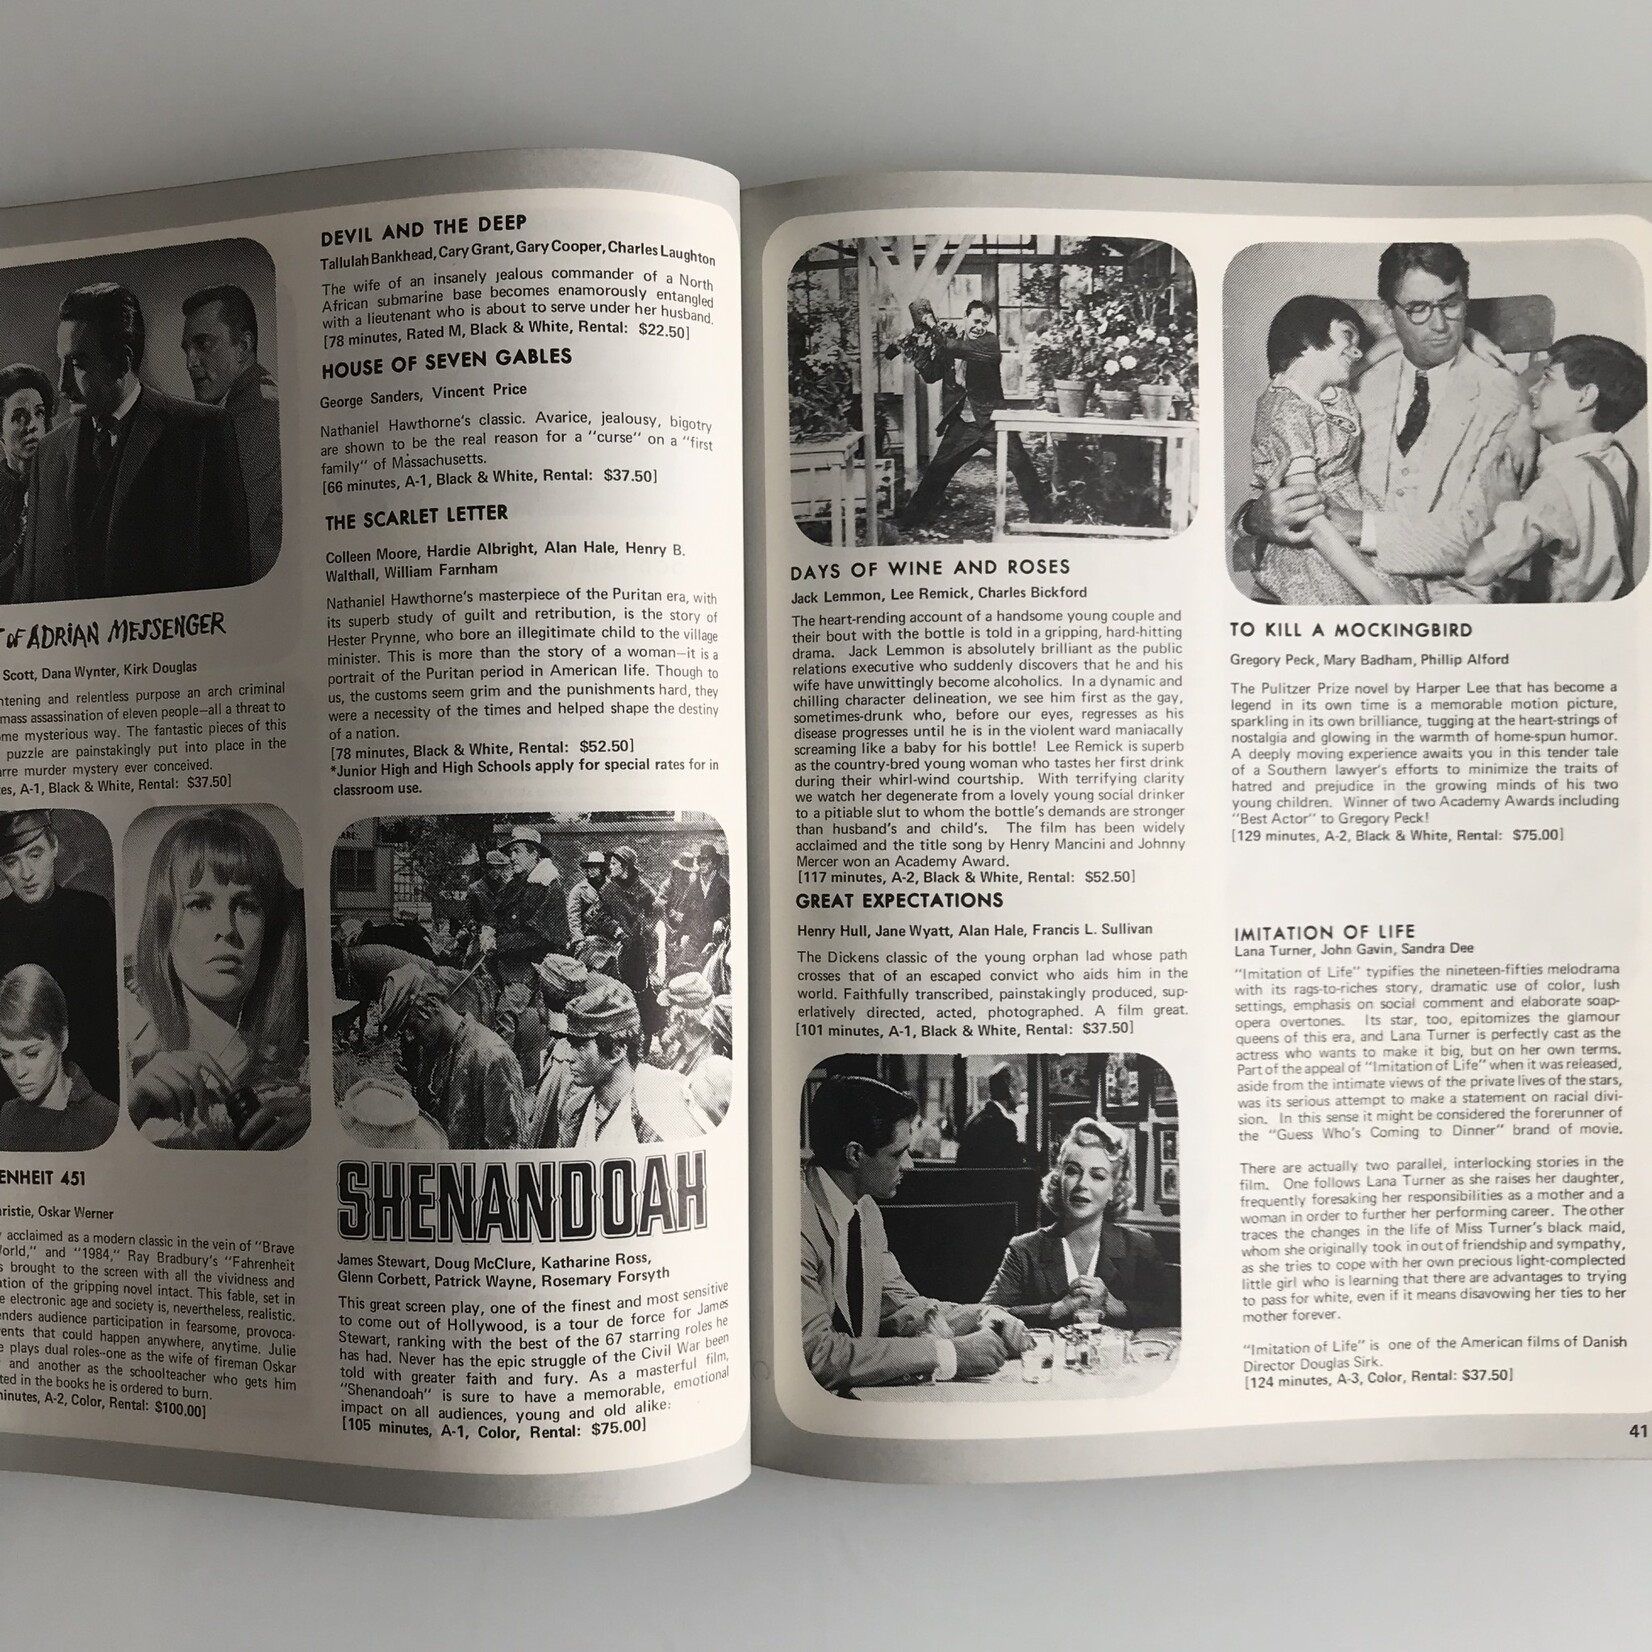 United Film Rental - Vintage 1971 Film Catalog - Paperback (USED - G)